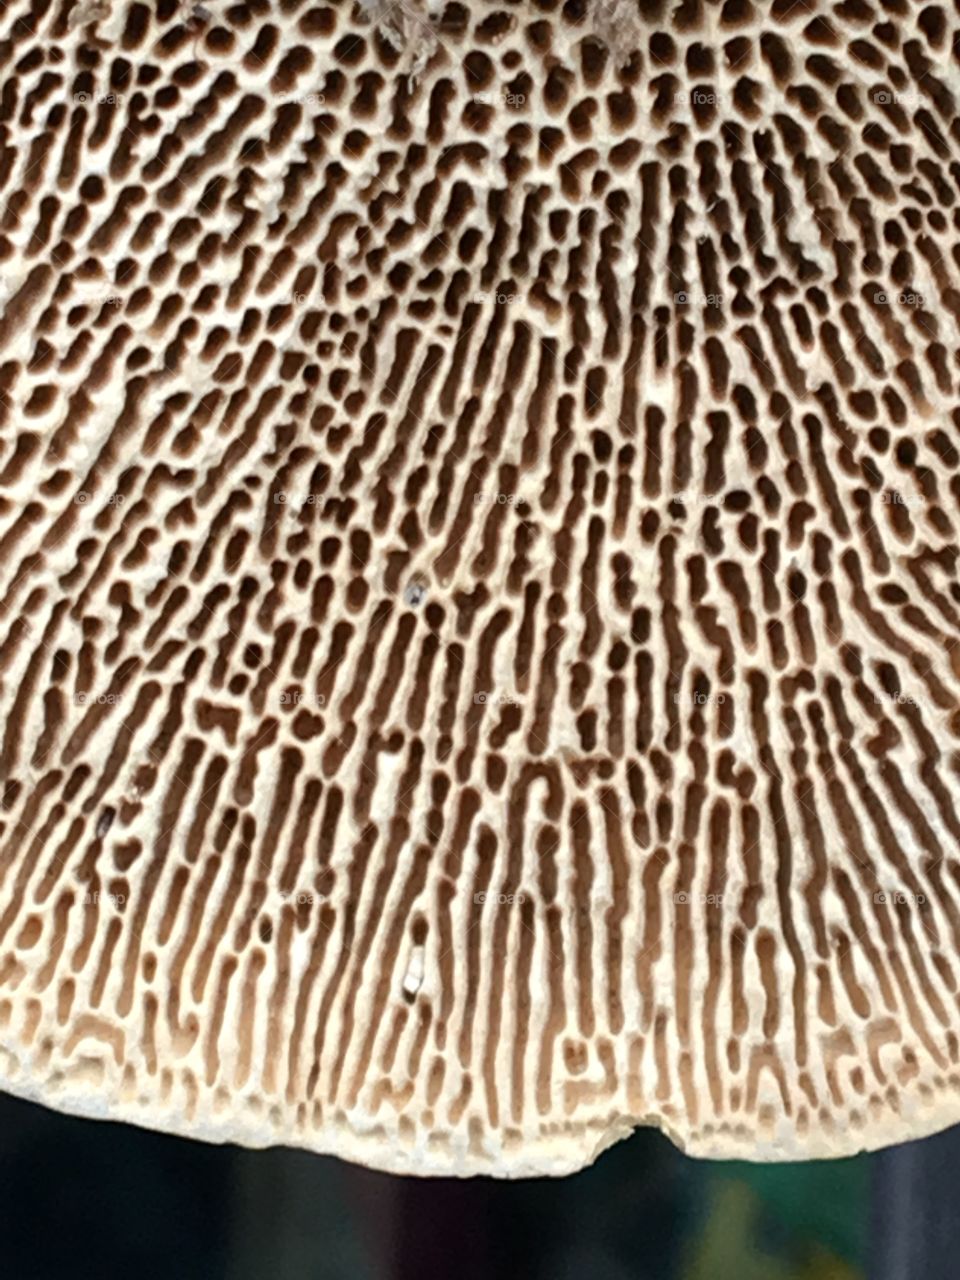 Underside tree fungus 